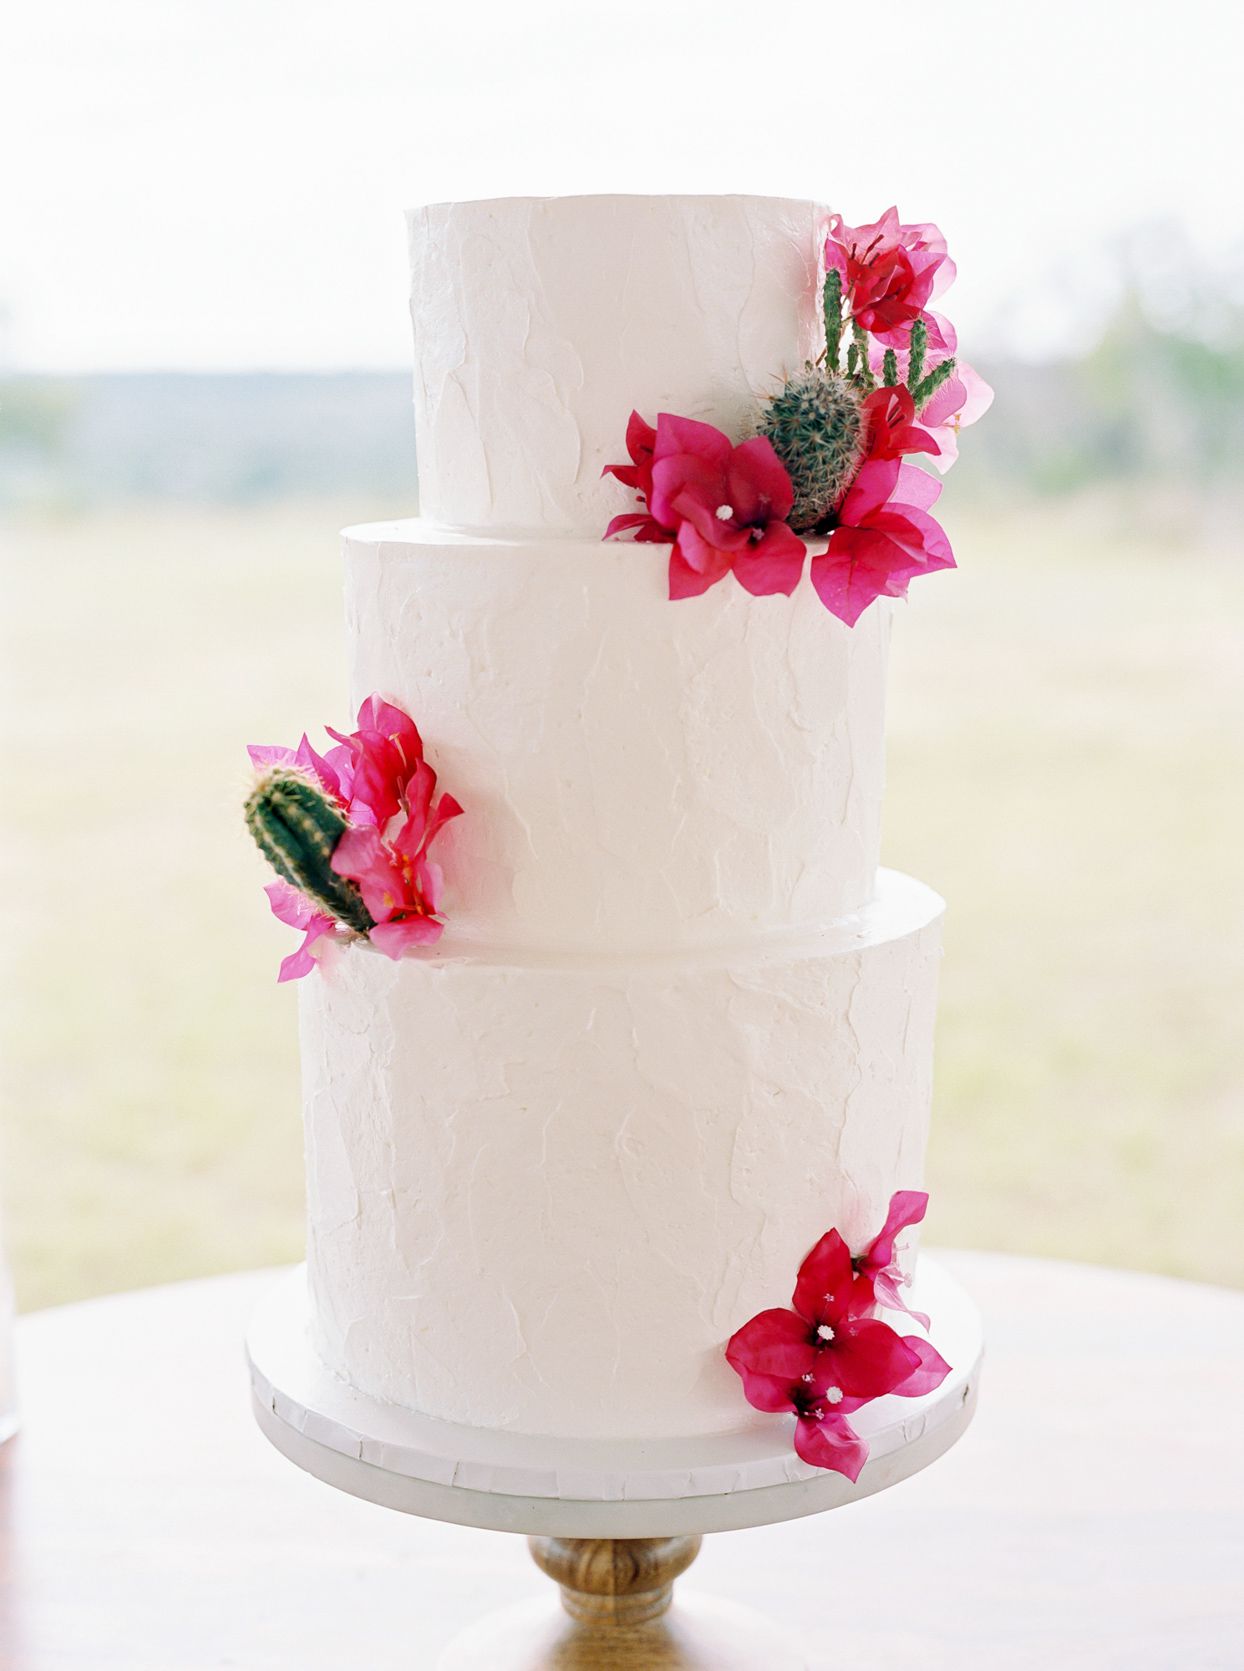 three-tiered wedding cake with flowers